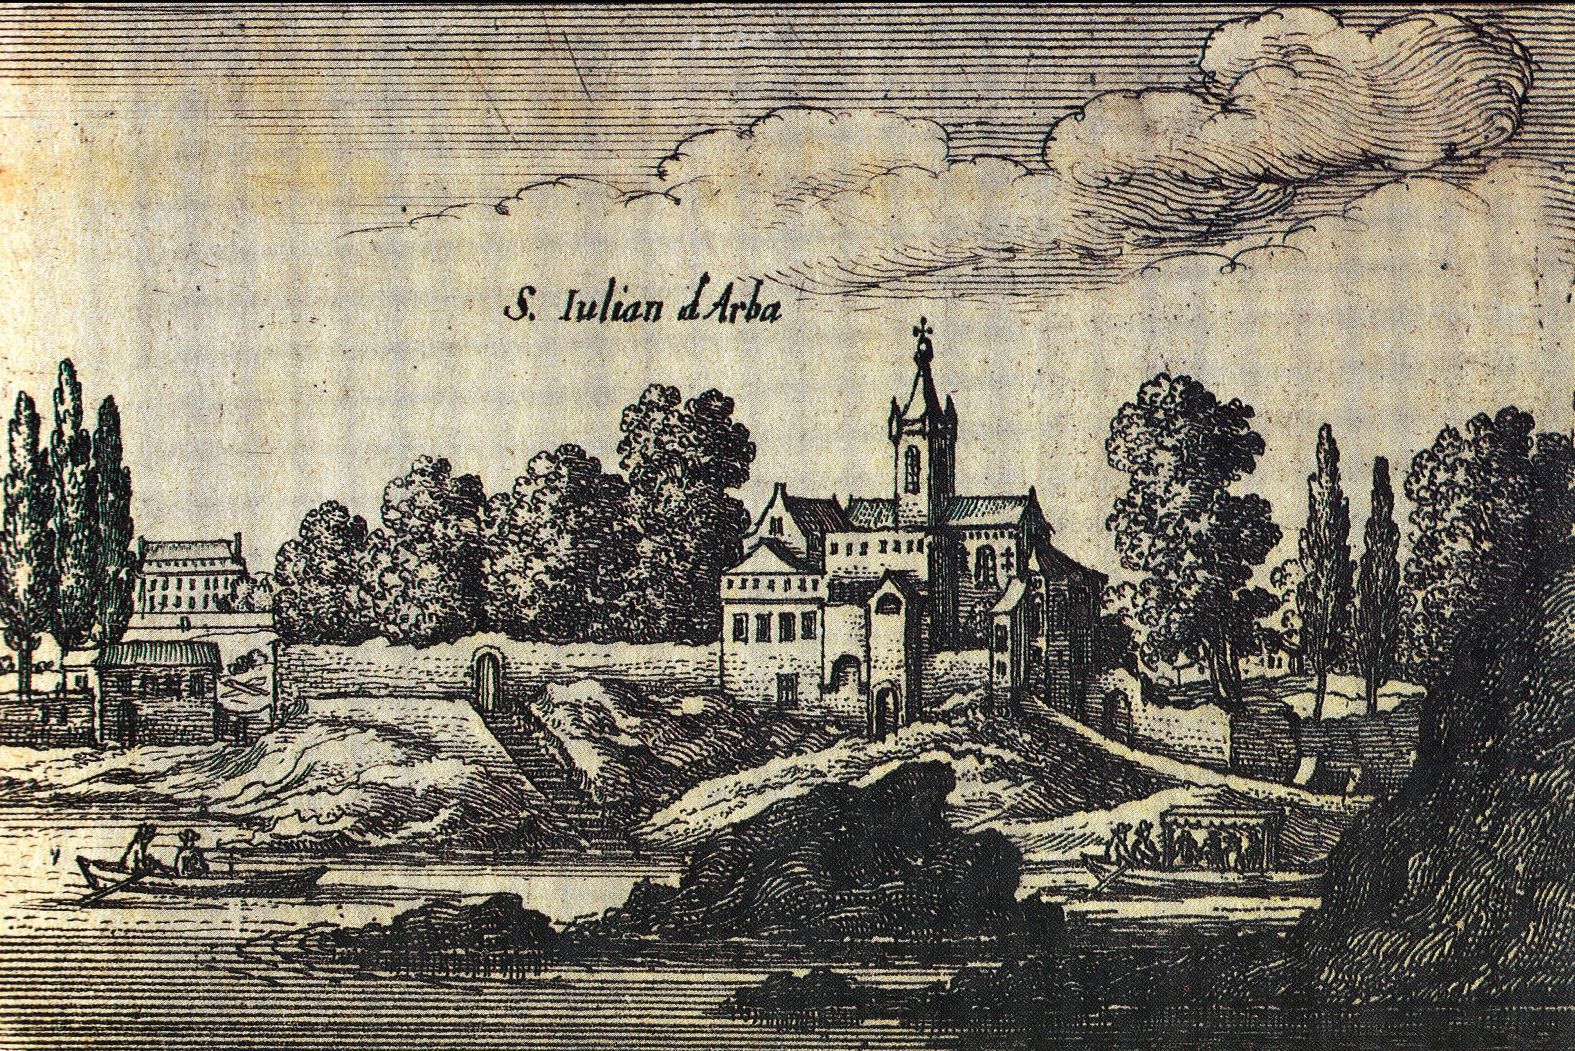 Foto 1: Wenceslaus Hollar, S. Iulian d’Arba, incisione calcografica, 1665 circa (da G. Salvi, San Giuliano d’Albaro, in “Genova. Rivista municipale”, XVIII, 11, p. 19).